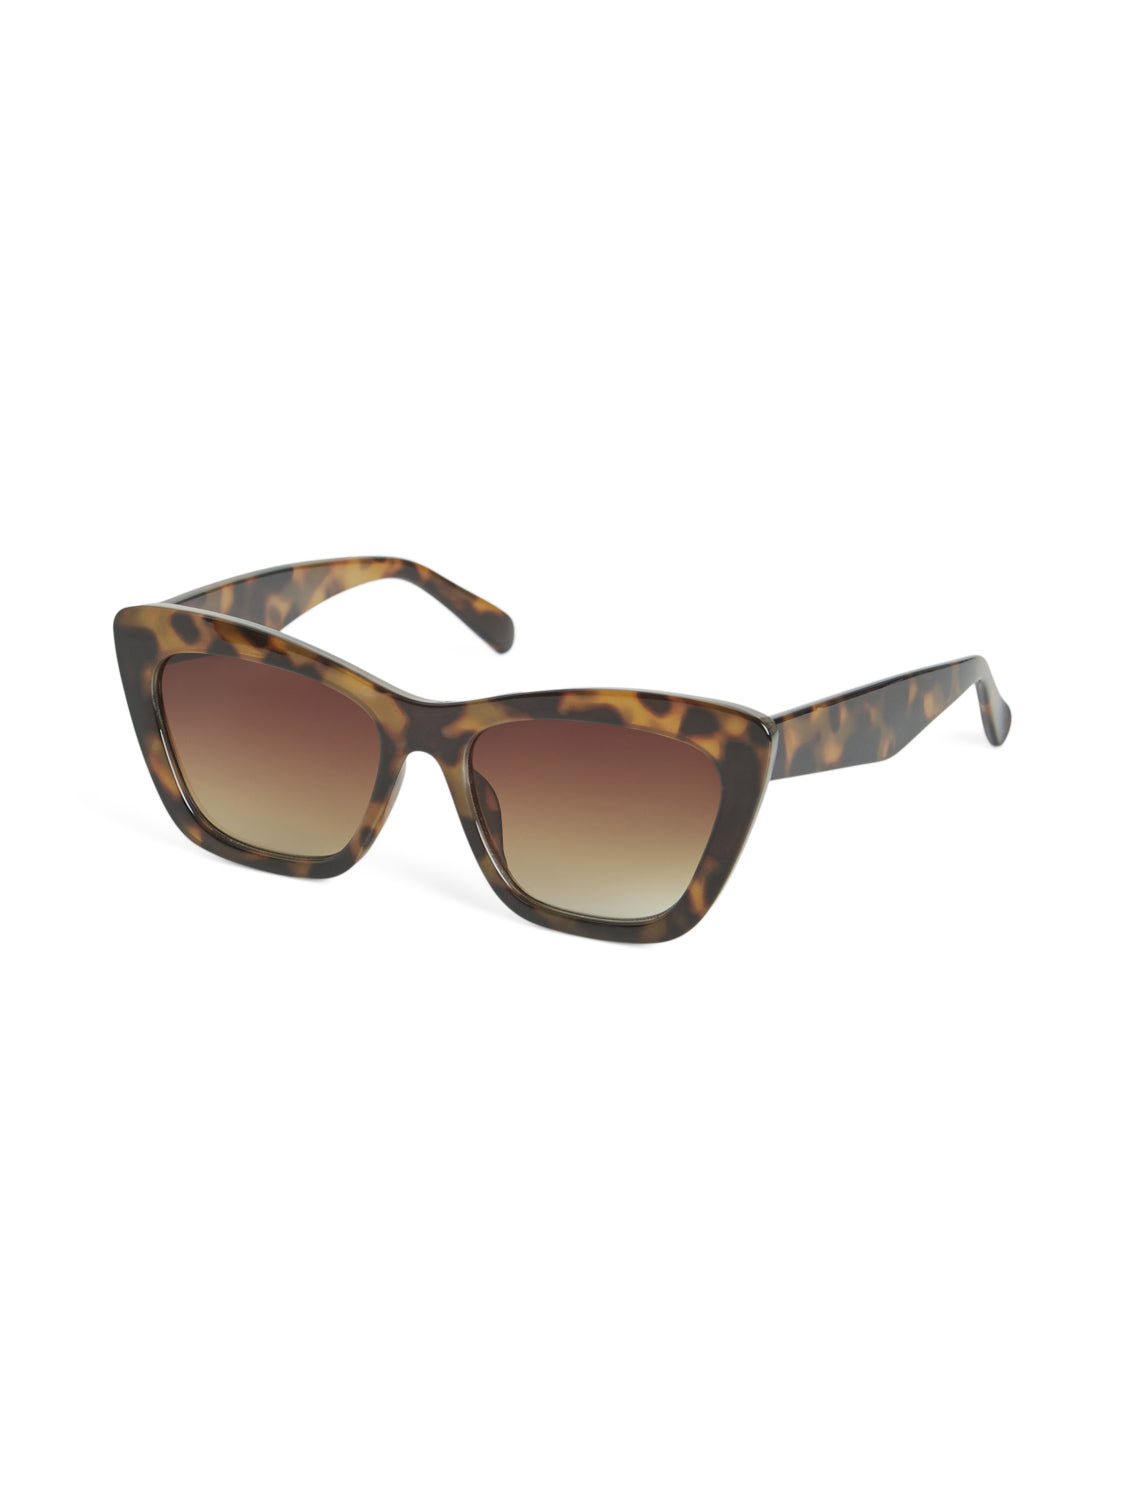 VIPEYTON Sunglasses - Tortoise Shell